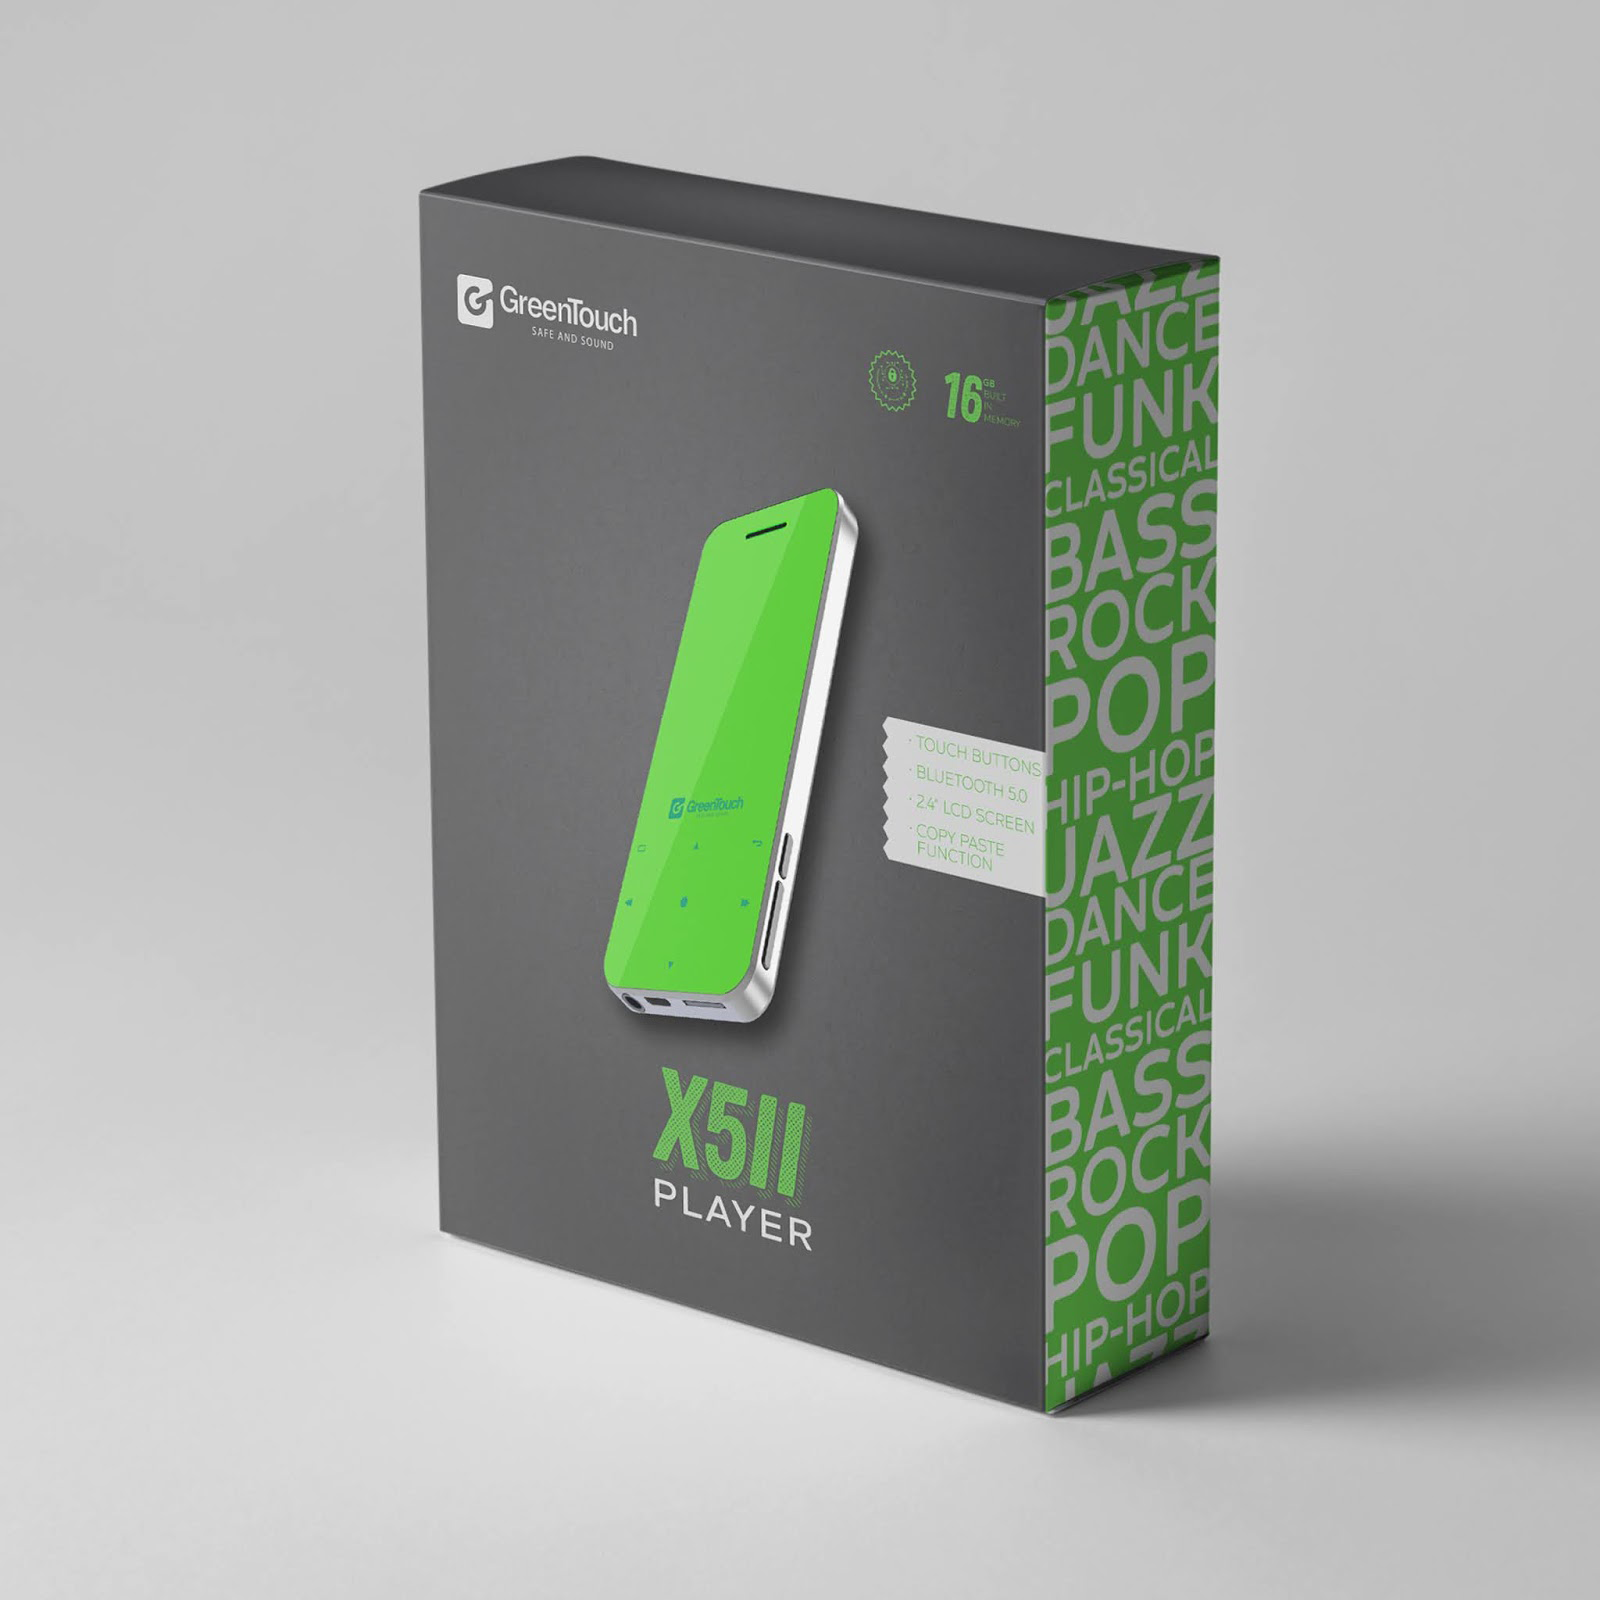 Greentouch x5ii 16 Go MP3 lecteur